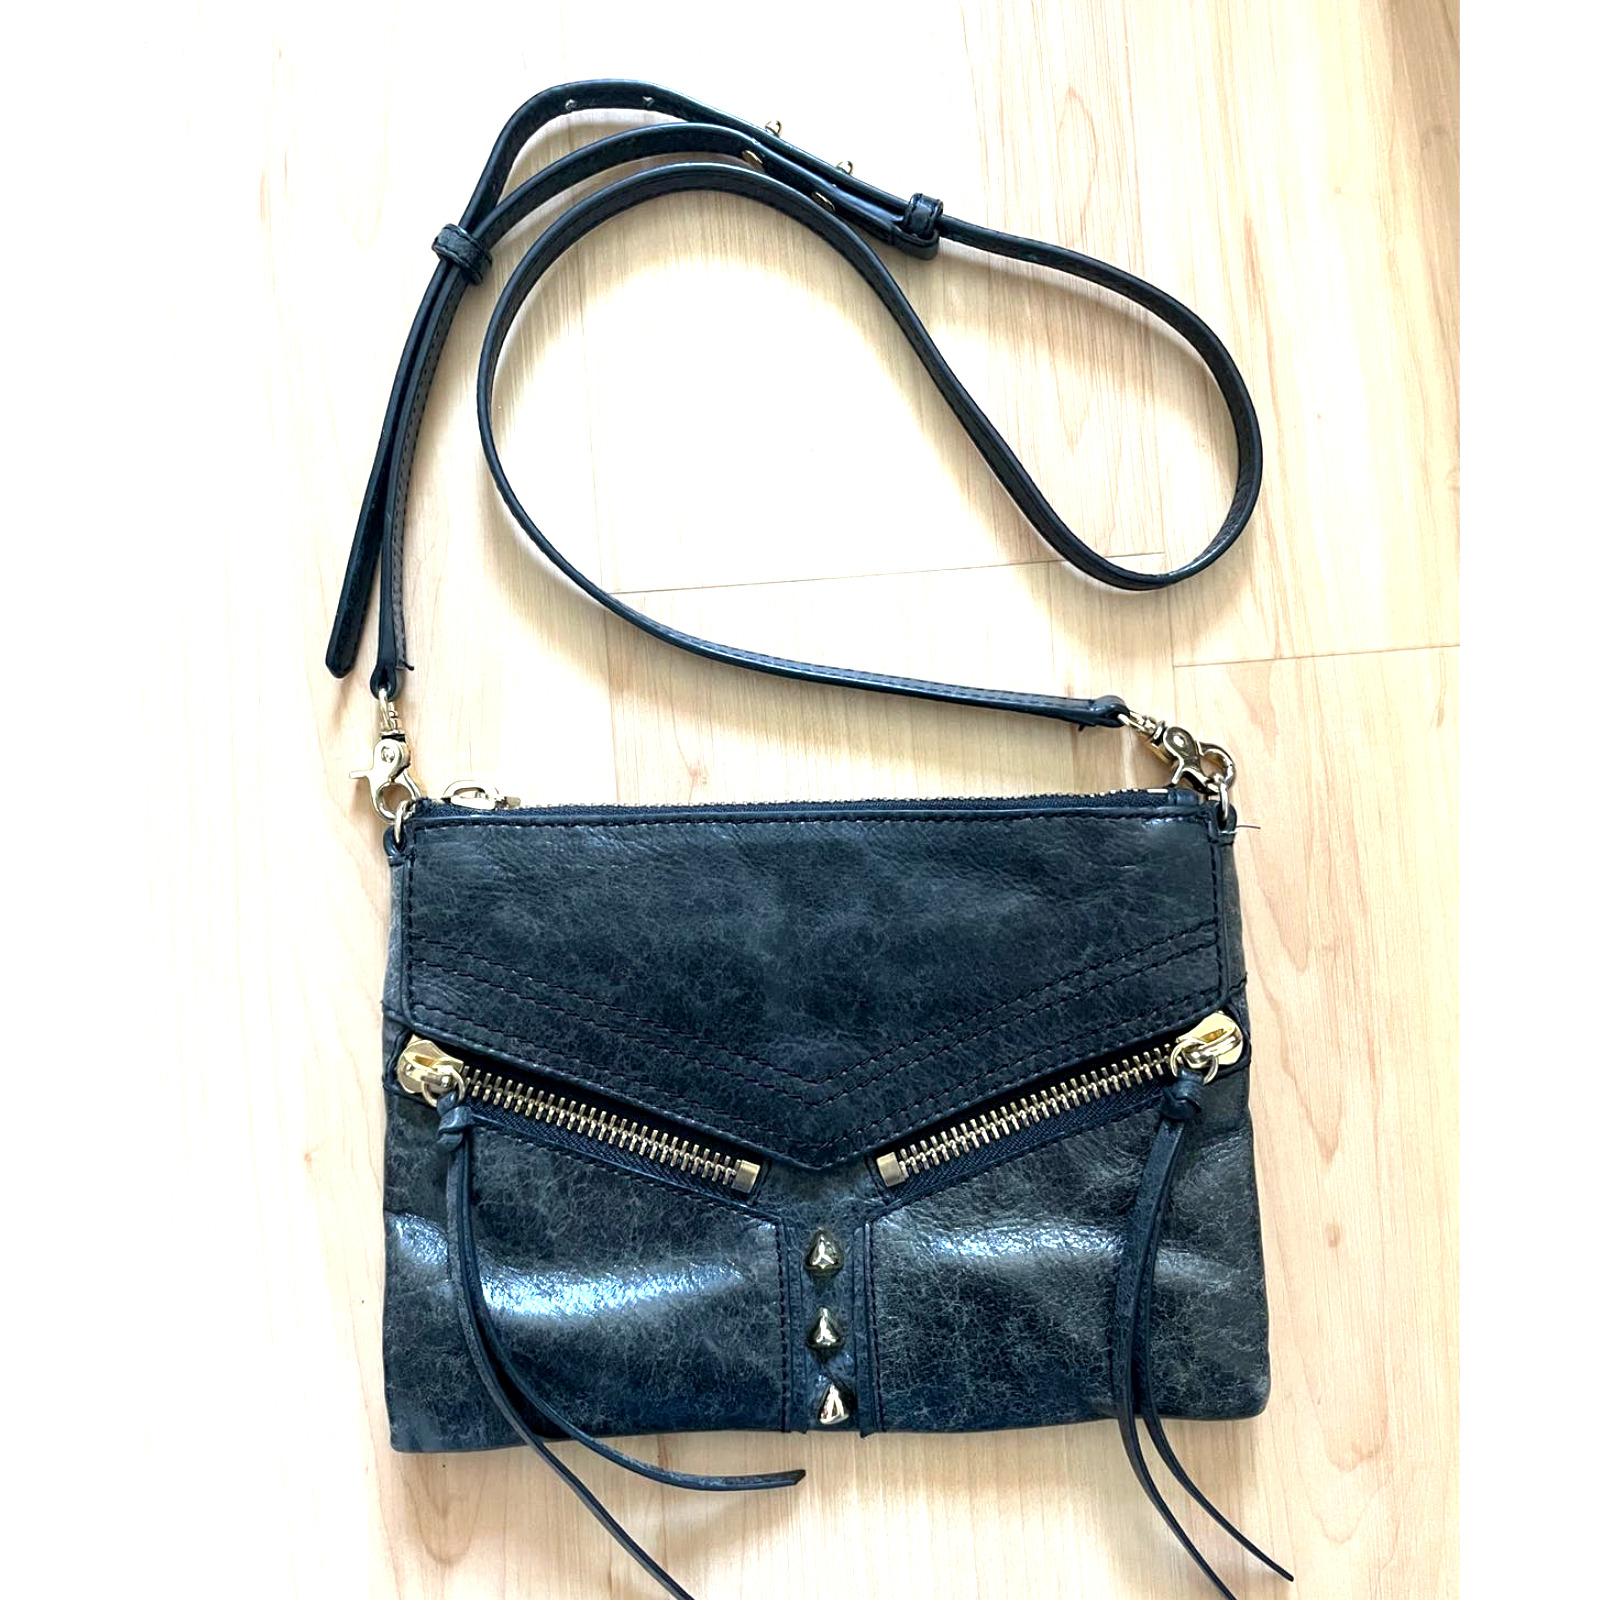 Botkier black distressed leather cross body bag purse